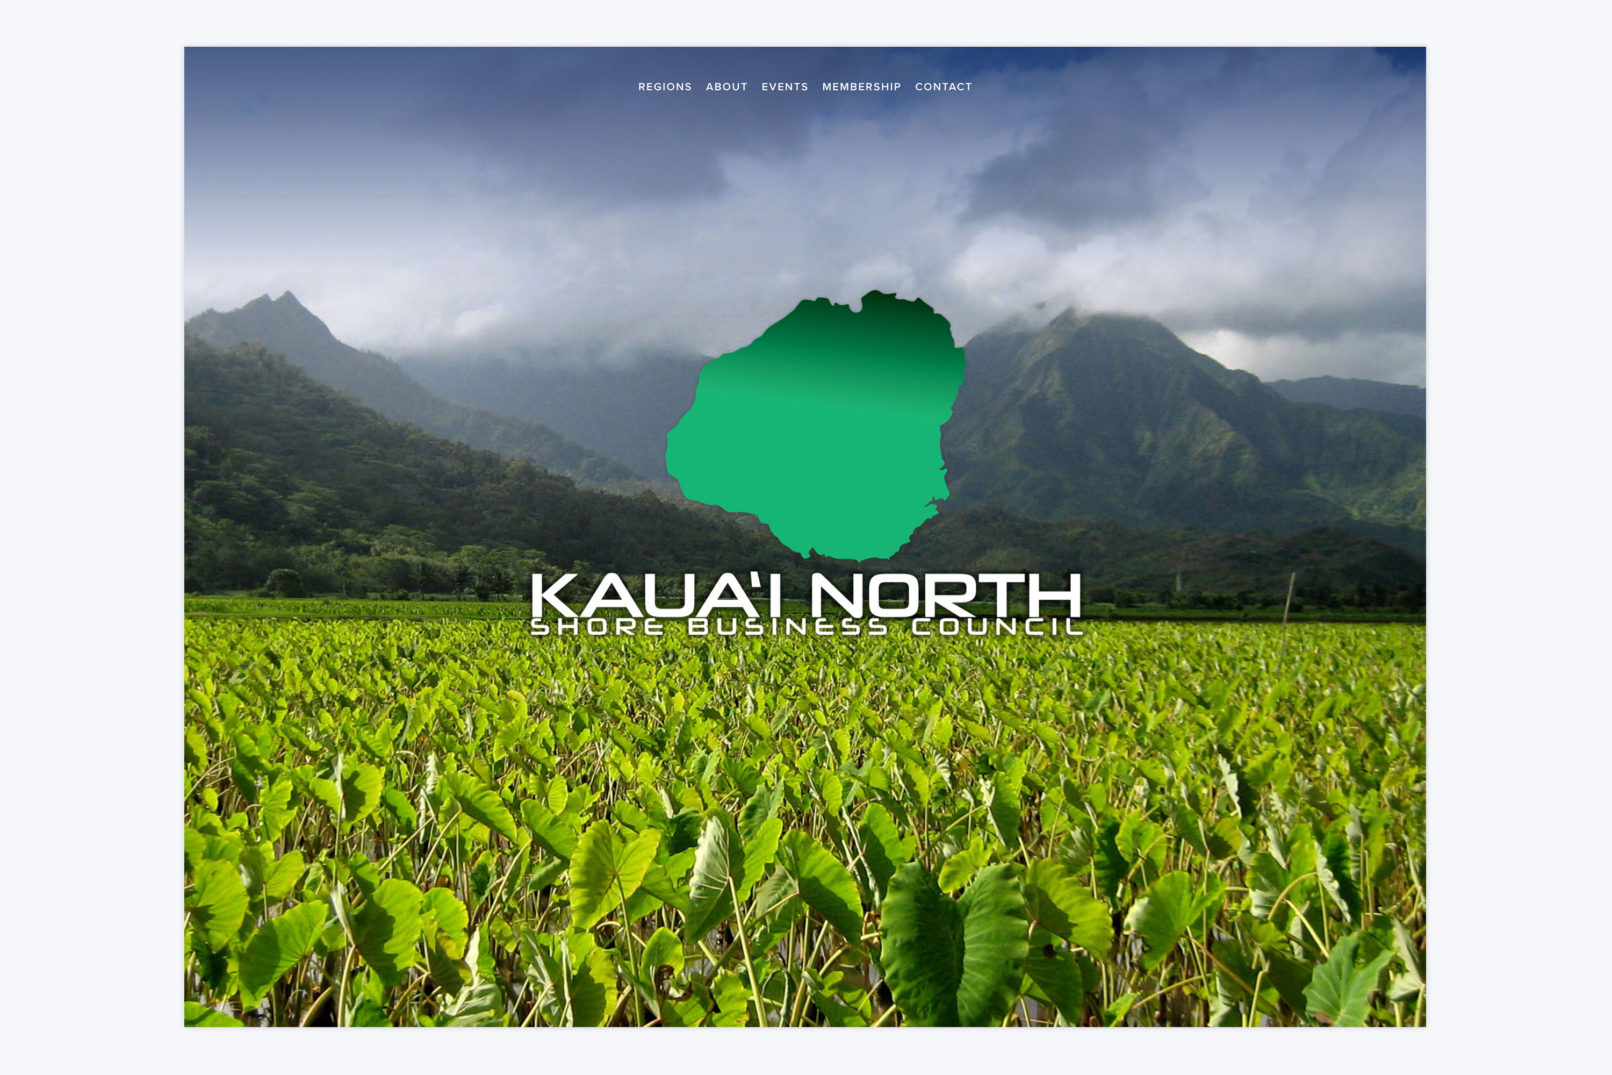 kauai north shore business council website design